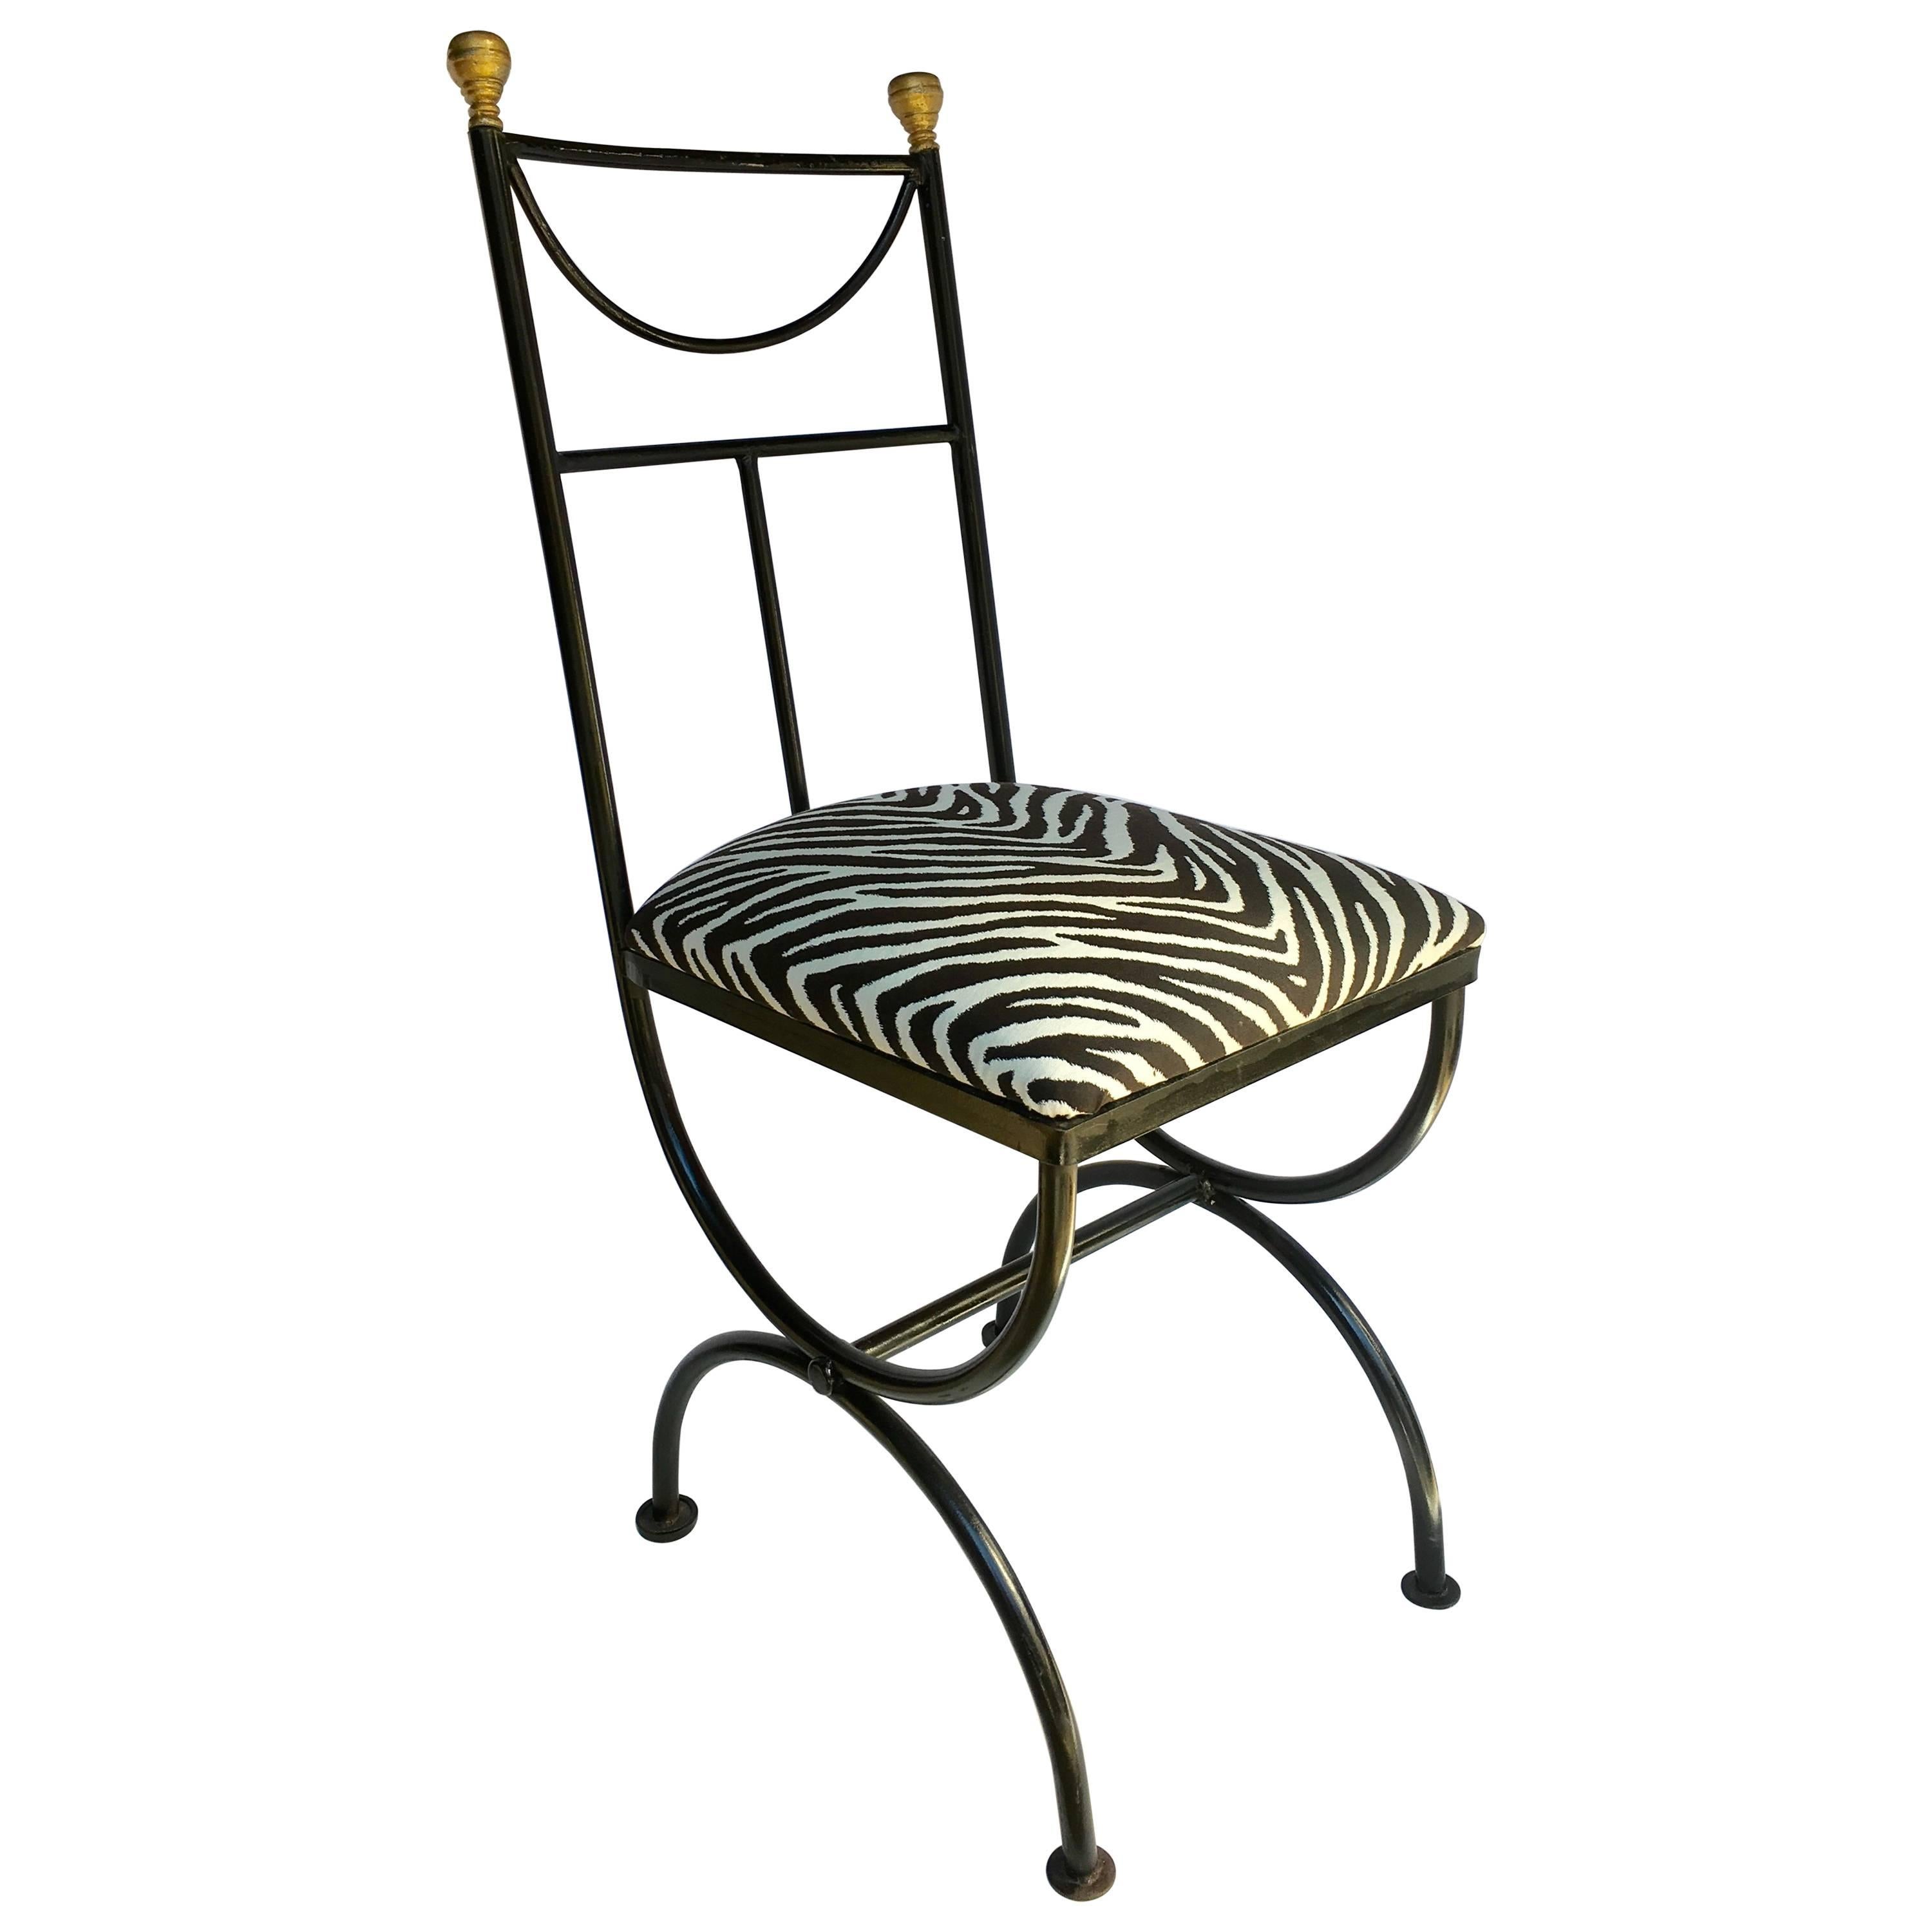 'Savonarola' Curule Style Iron Chair